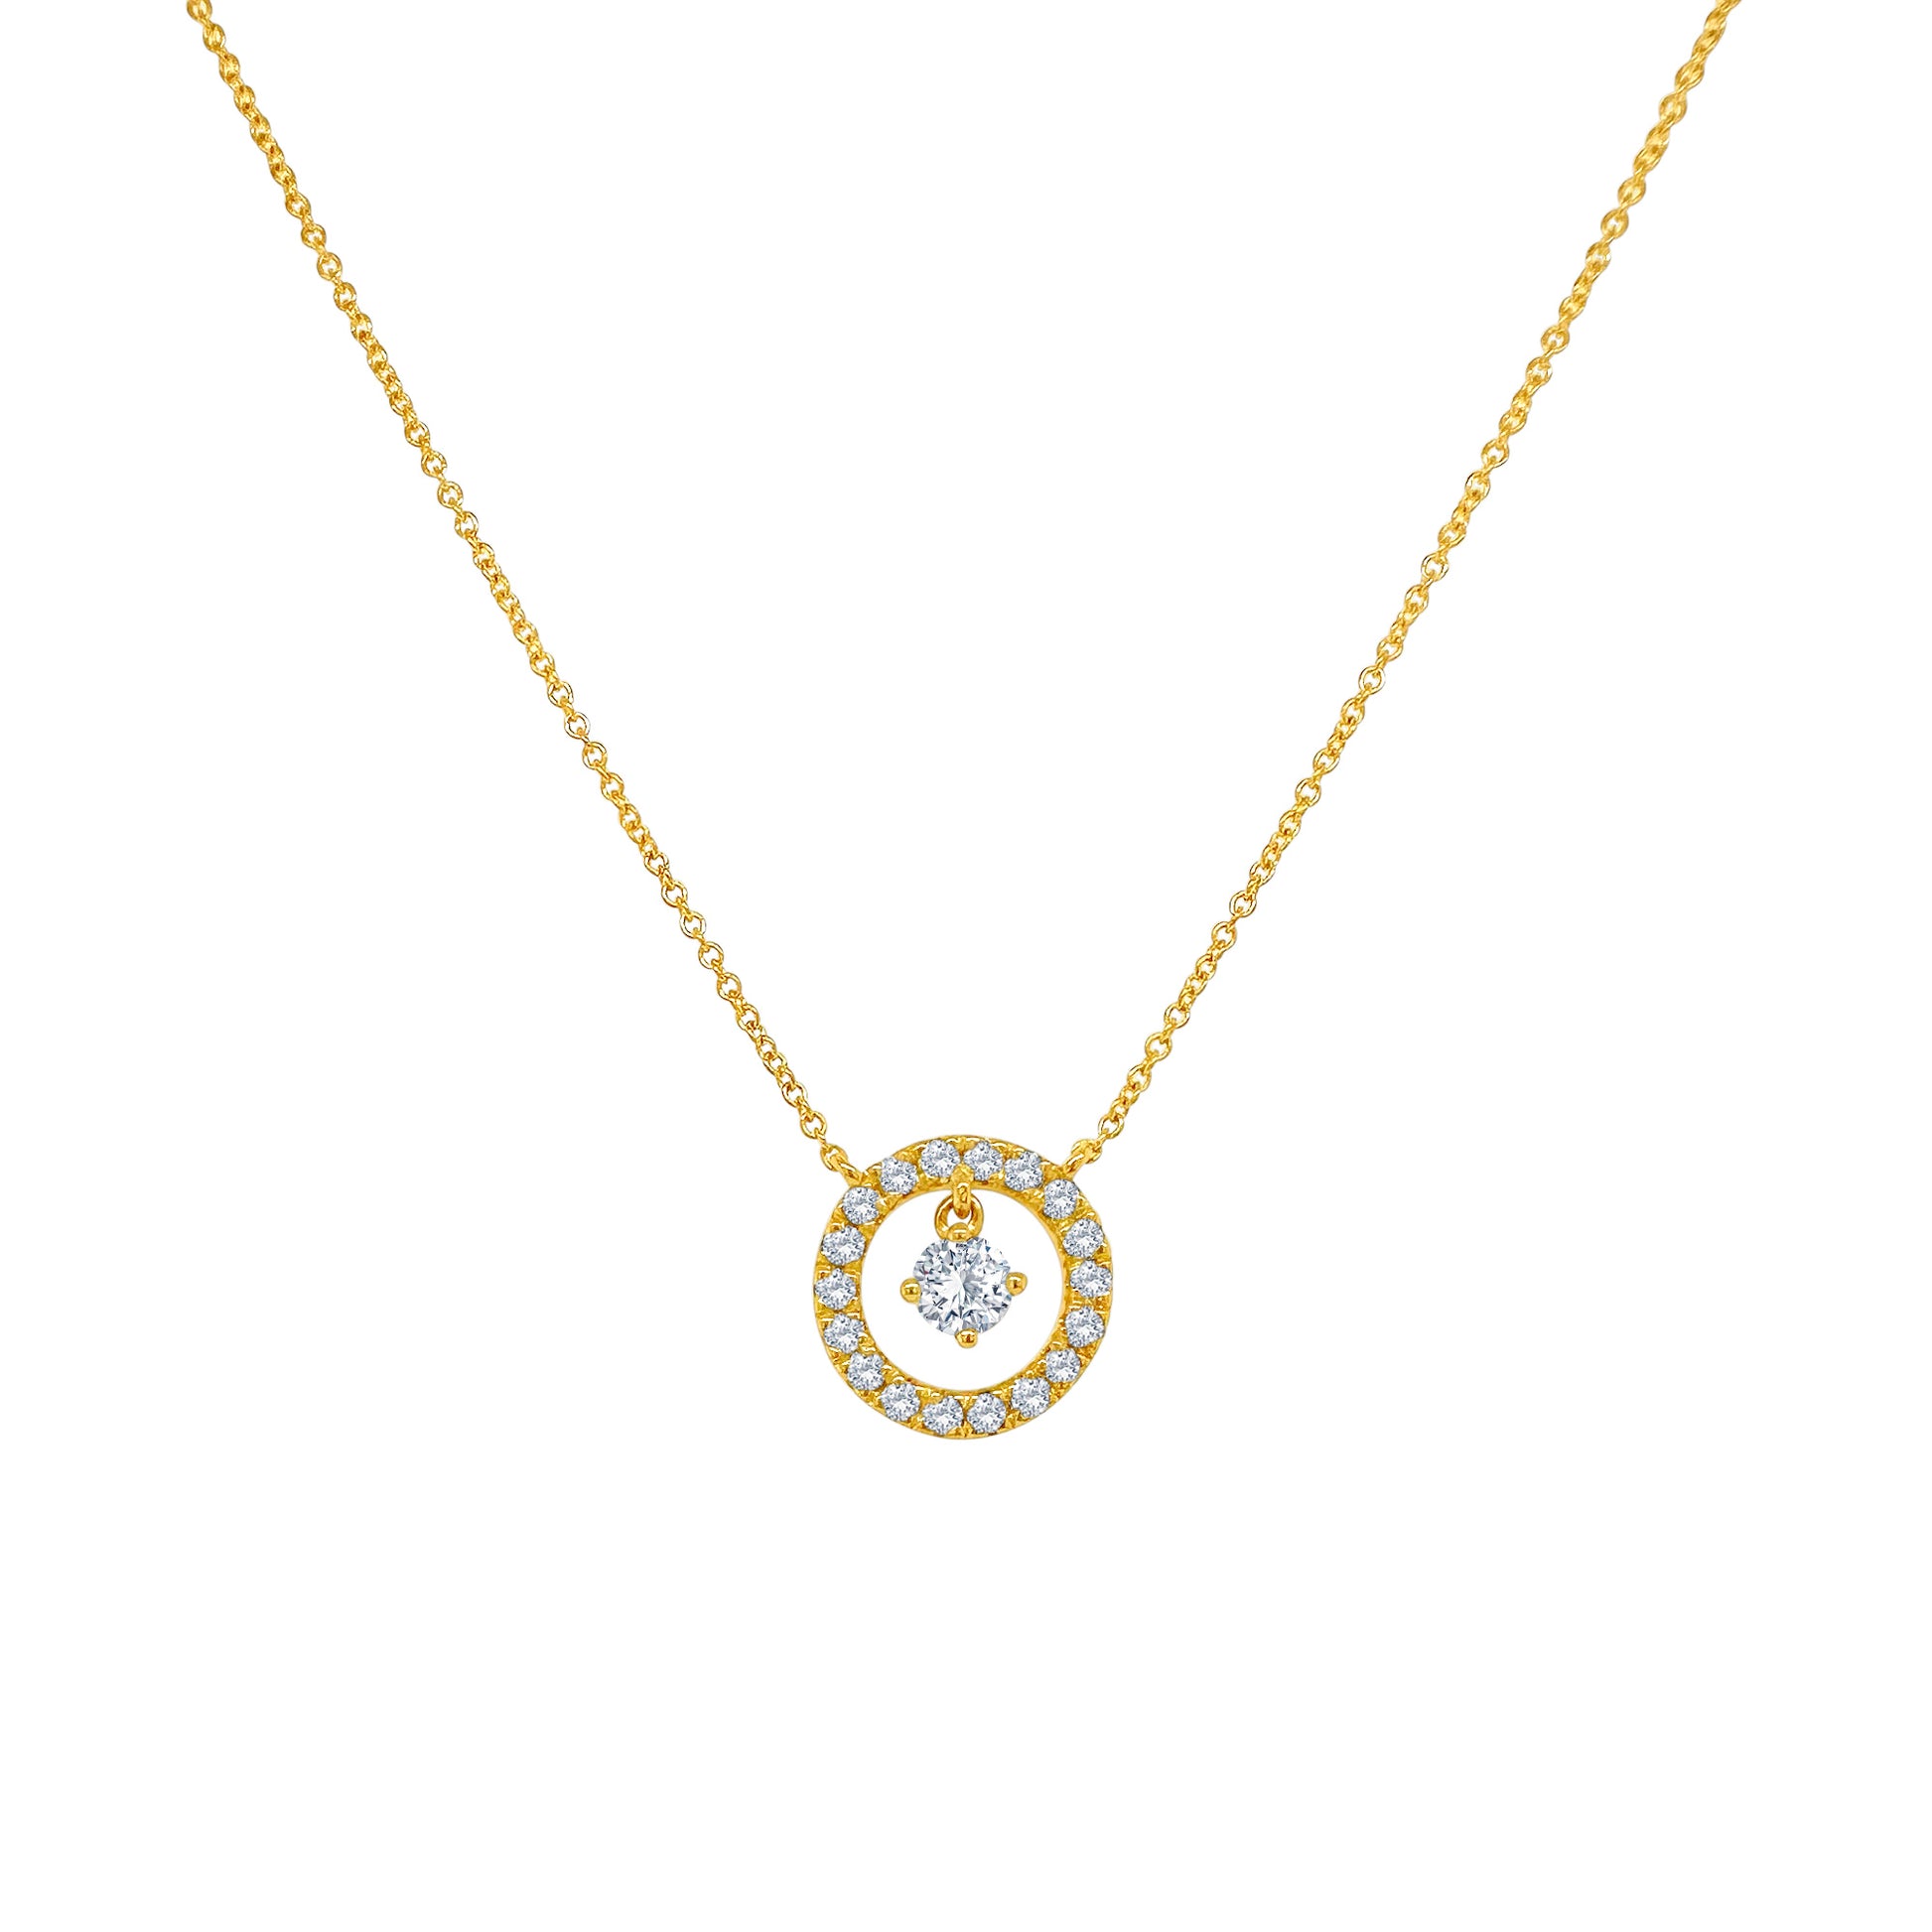 floating pendant," "round brilliant diamond," "halo design," "sparkling jewelry," "elegant accessory," "luxurious necklace," "diamond halo pendant," "fine jewelry piece.